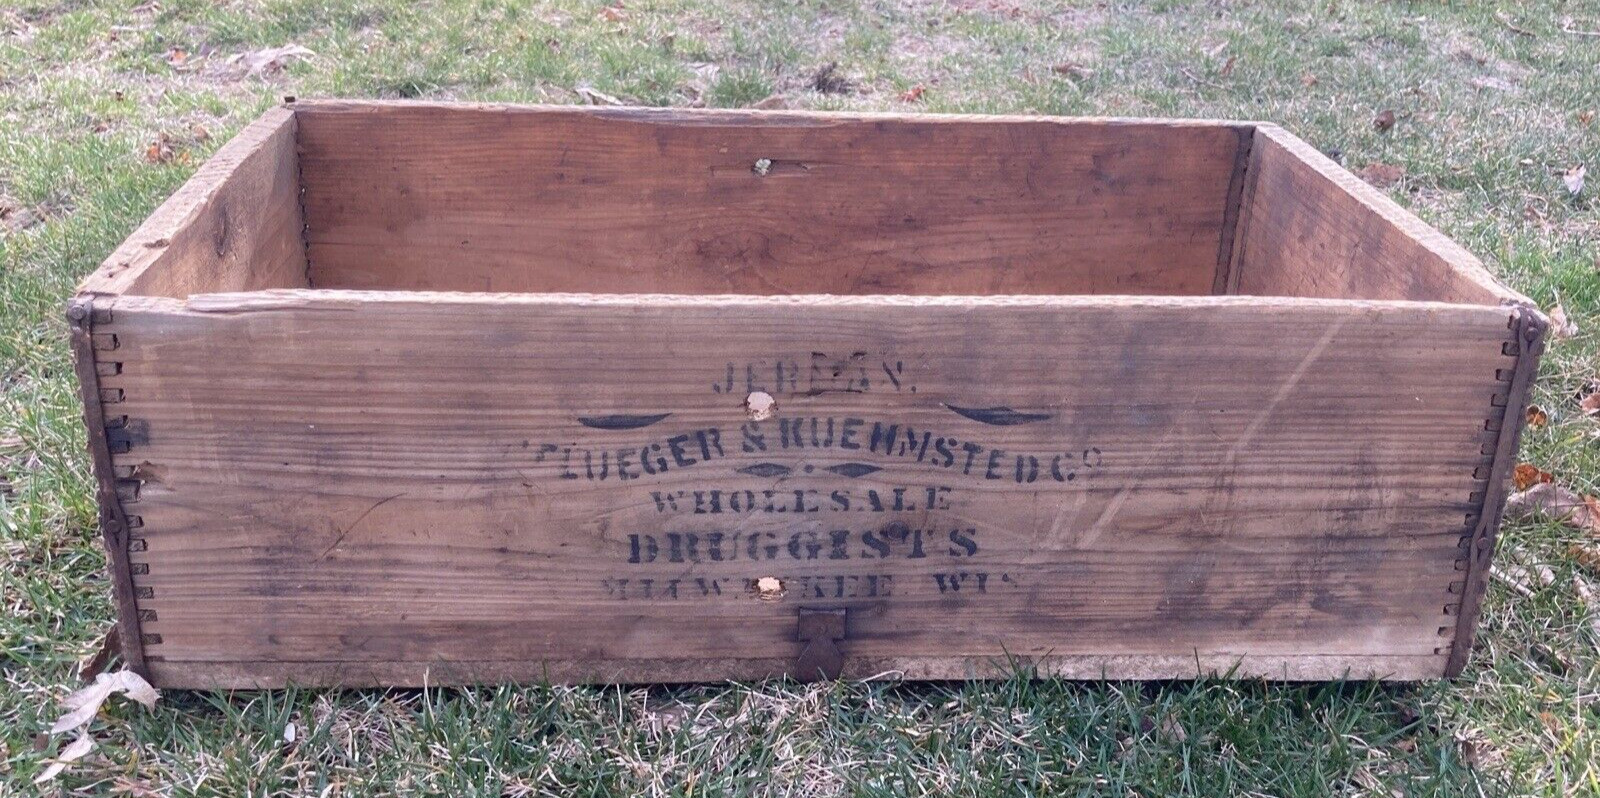 Old Wood Box Crate Jerman Pflueger & Kuehmsted Druggist Advertising Milwaukee Wi